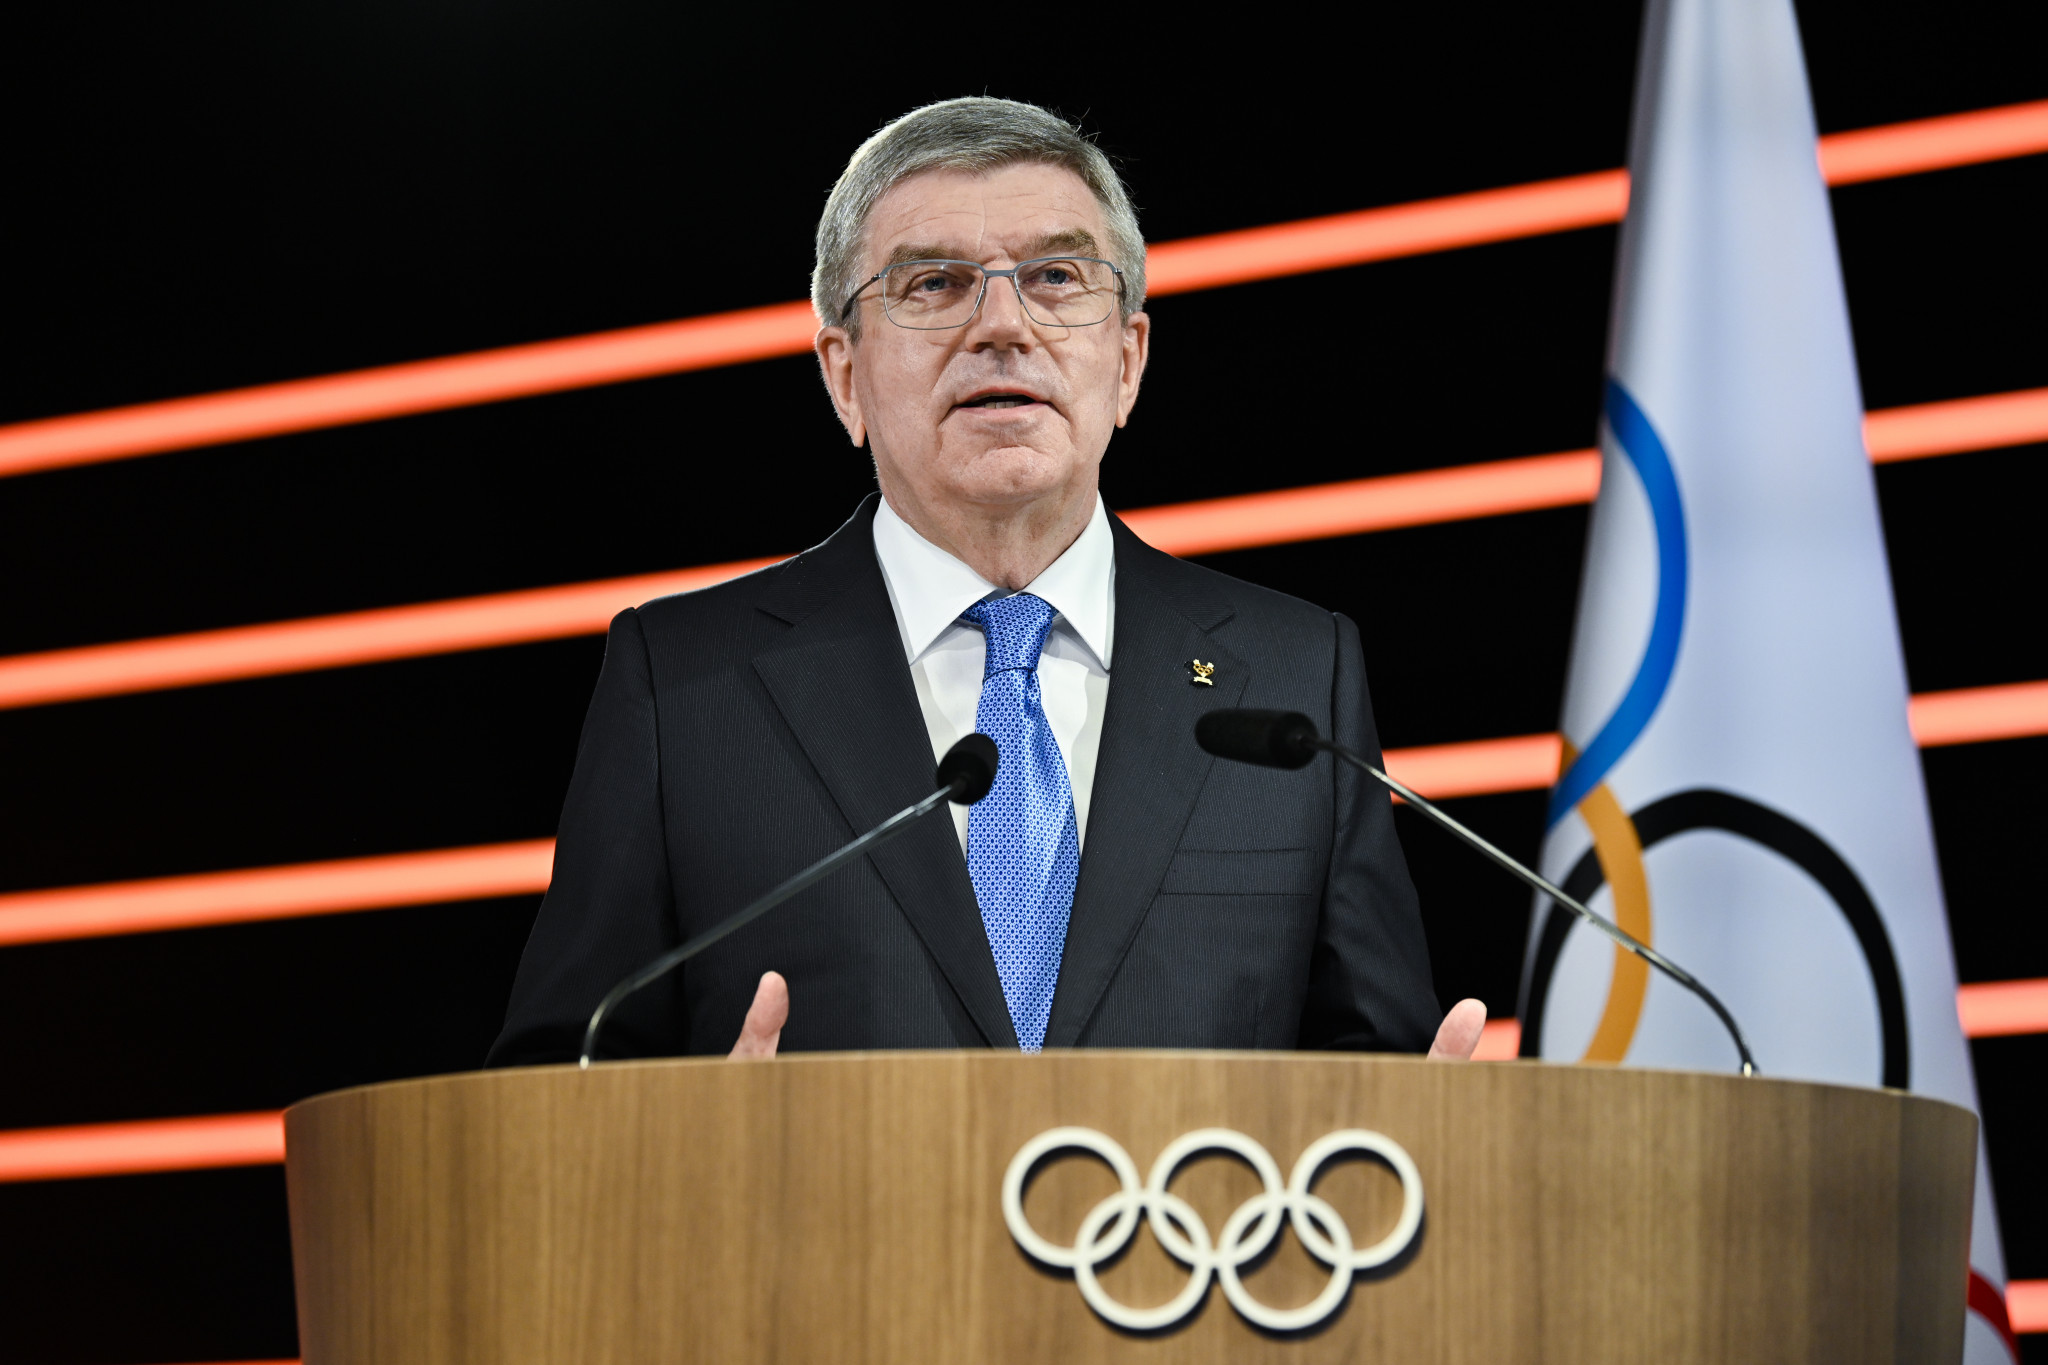 IOC President Thomas Bach is set to address the EOC General Assembly tomorrow ©IOC